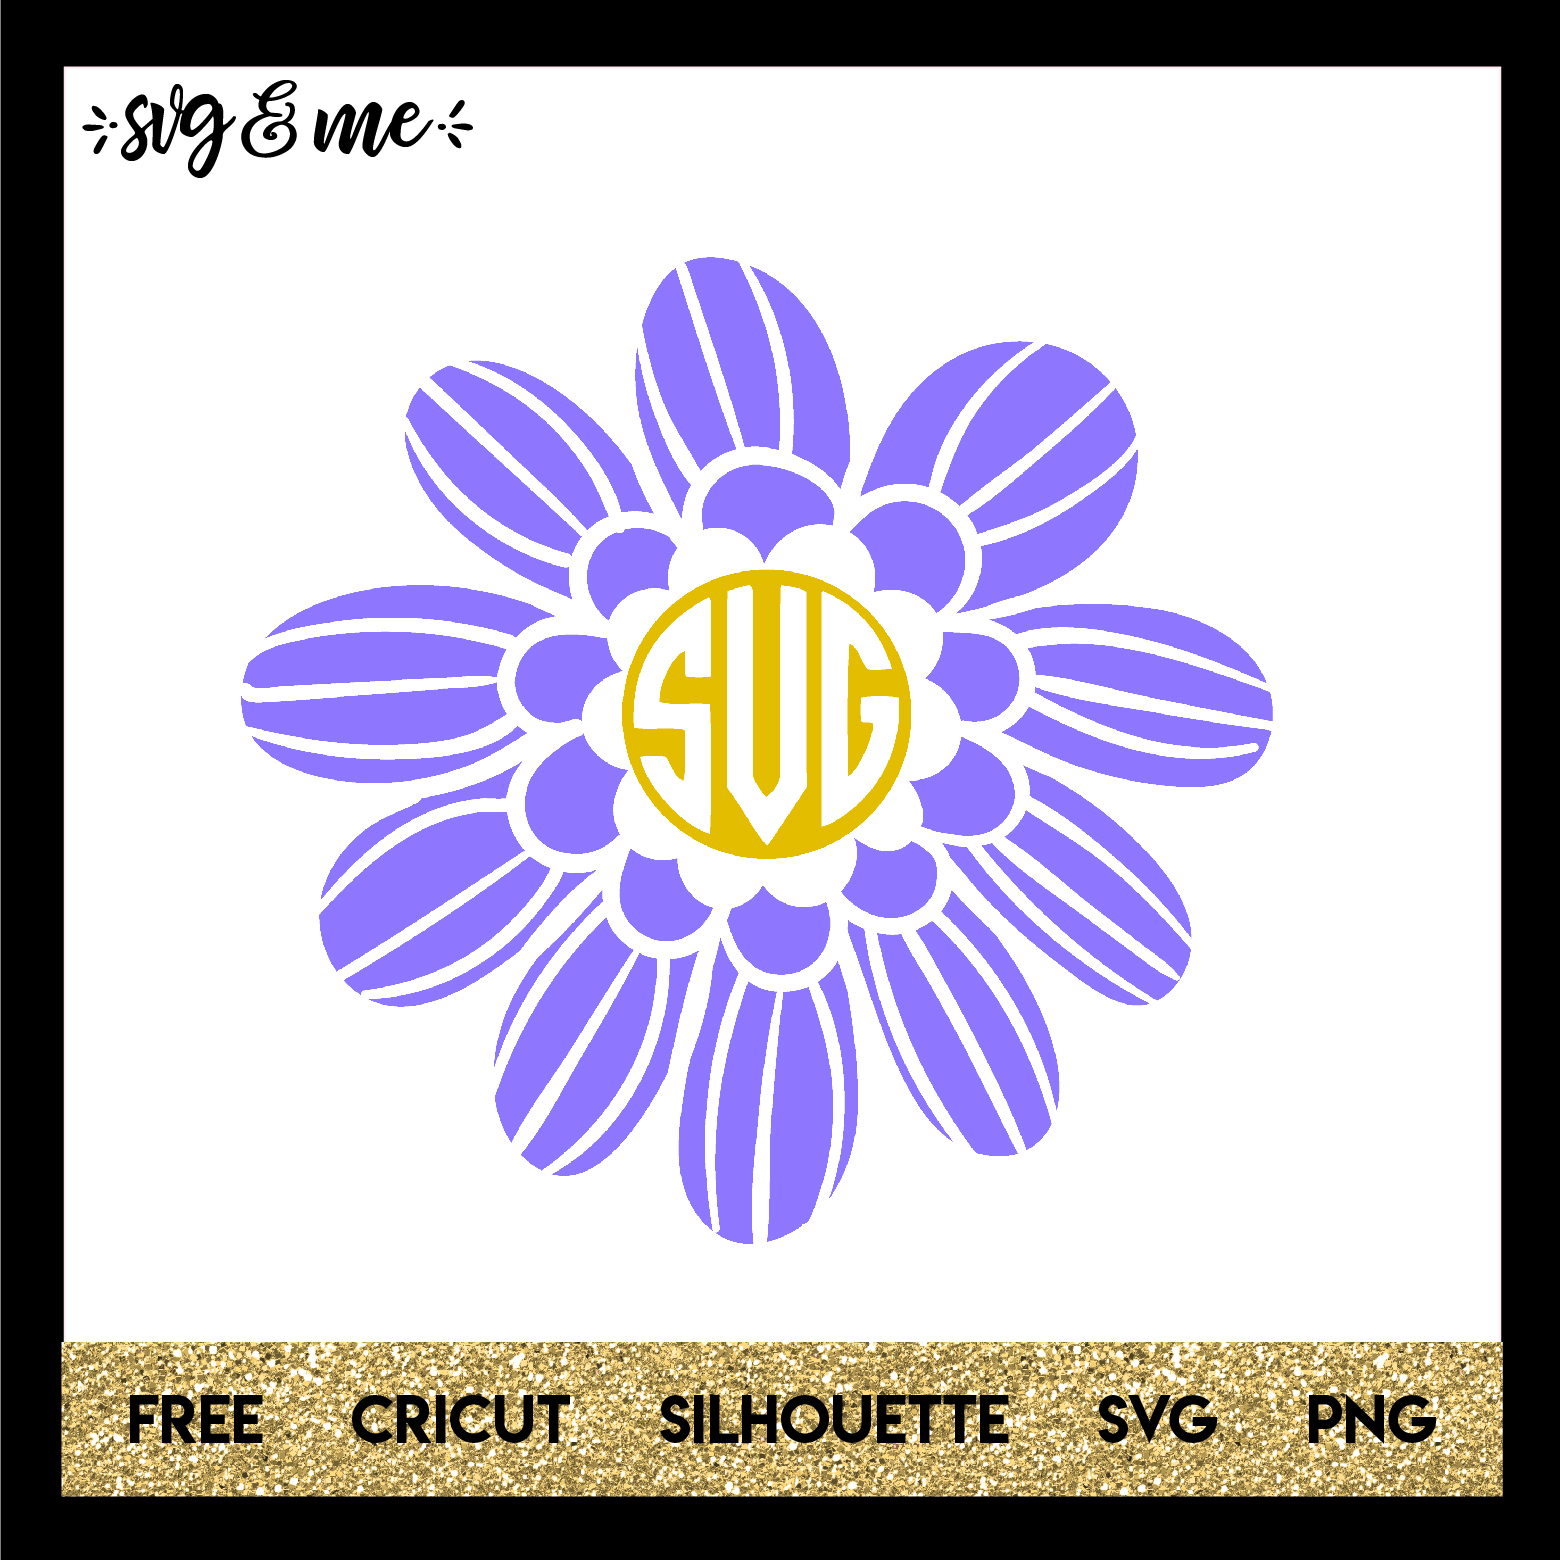 Free SVG - Flower Monogram - SVG & Me